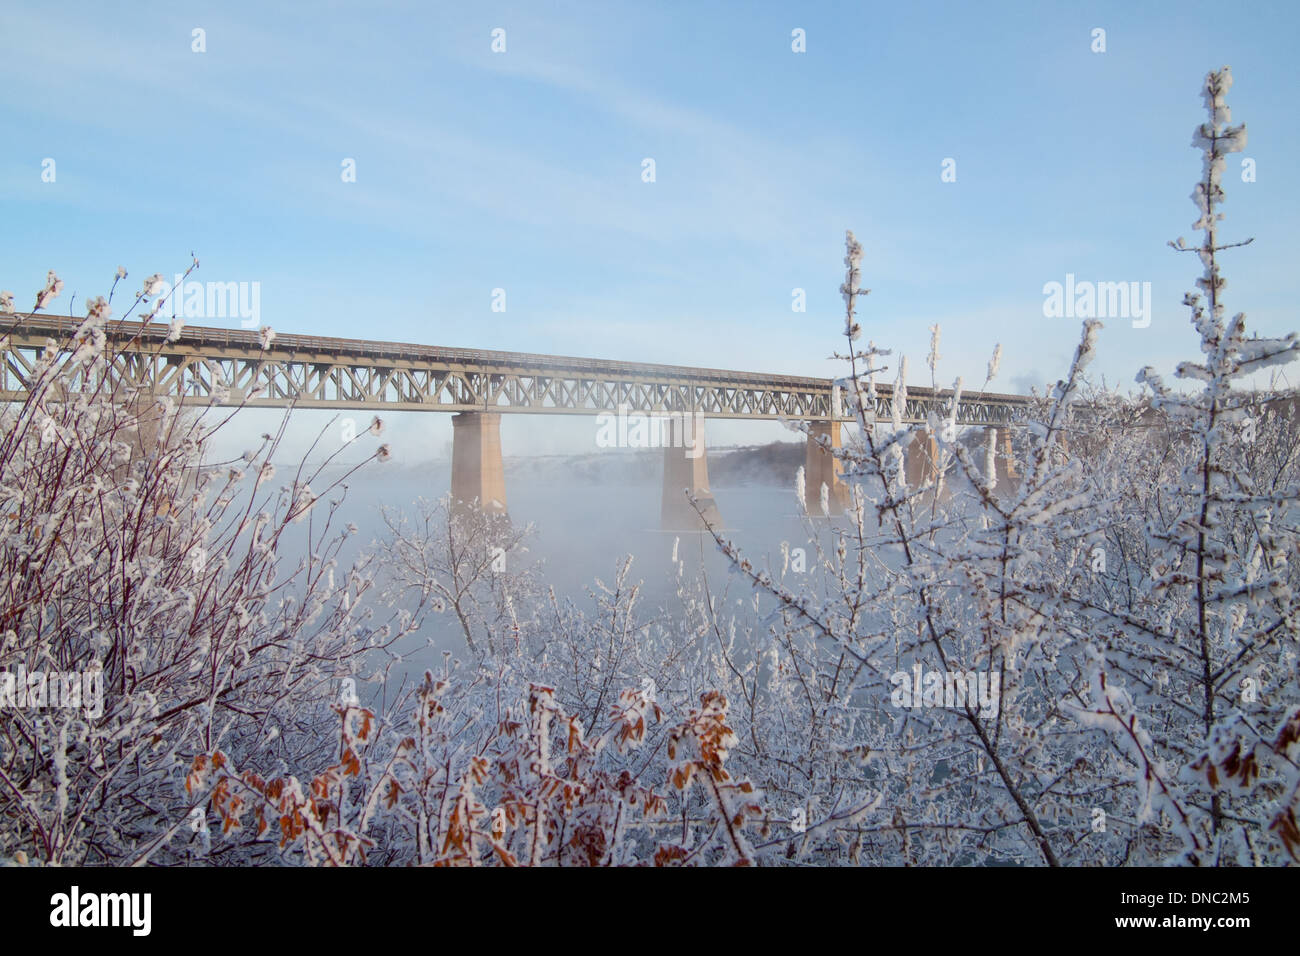 A winter view of the CPR Bridge spanning the South Saskatchewan River in Saskatoon, Saskatchewan, Canada. Stock Photo